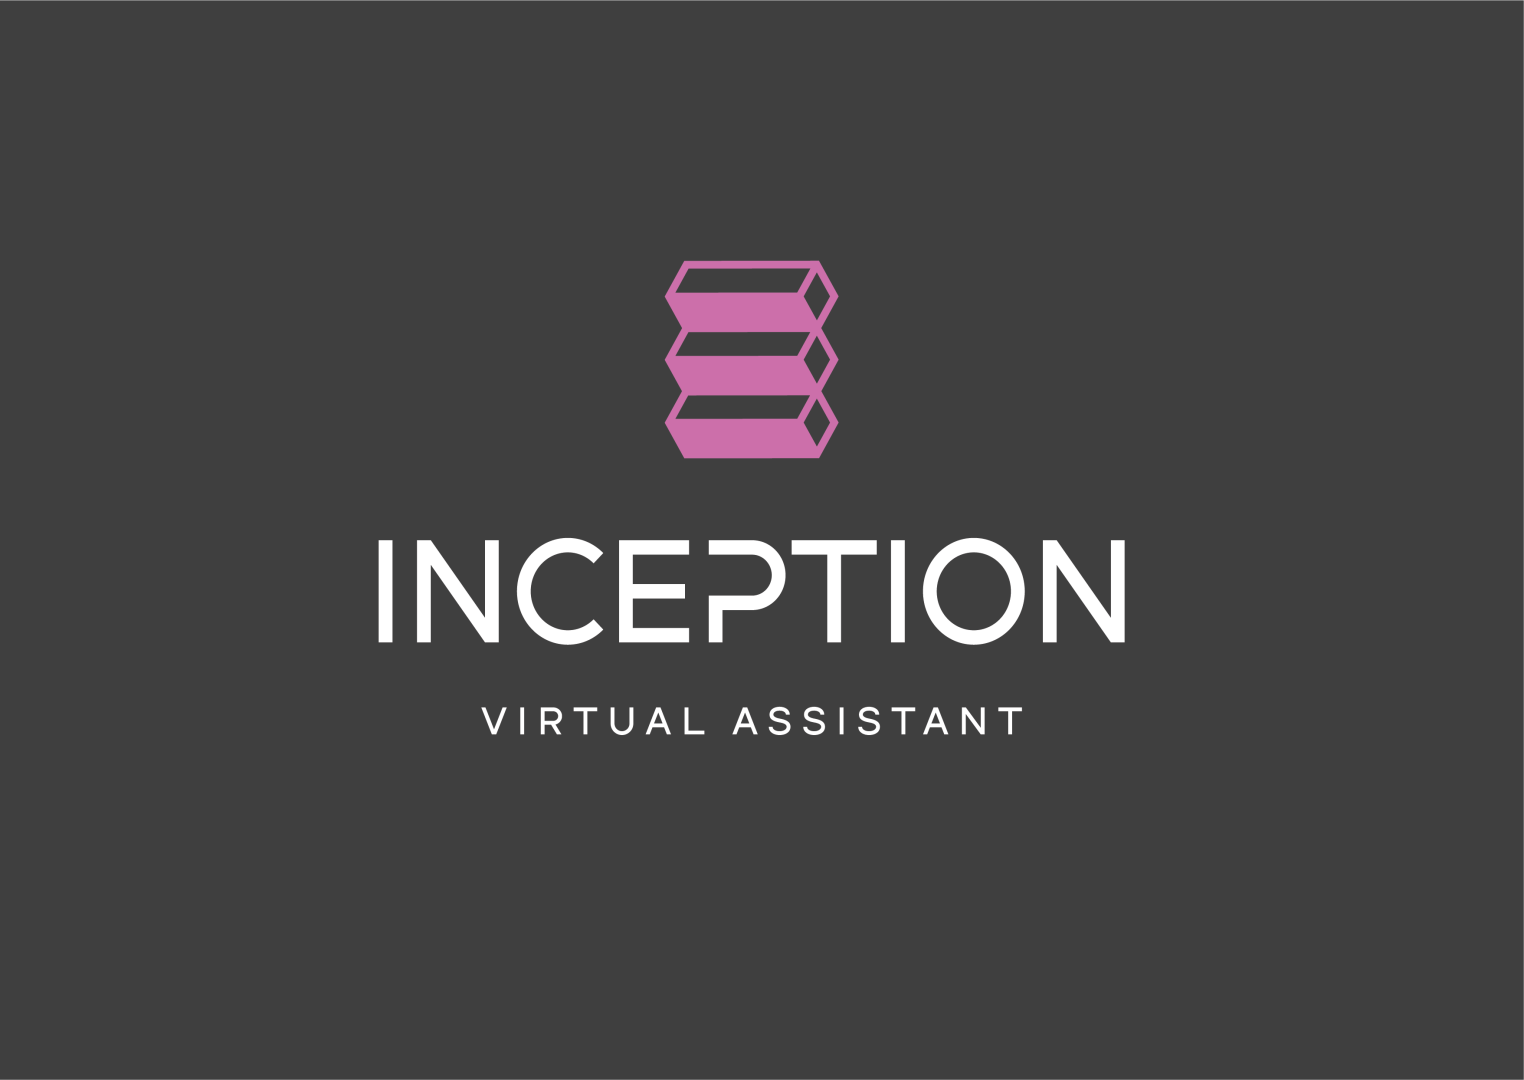 Inception VA